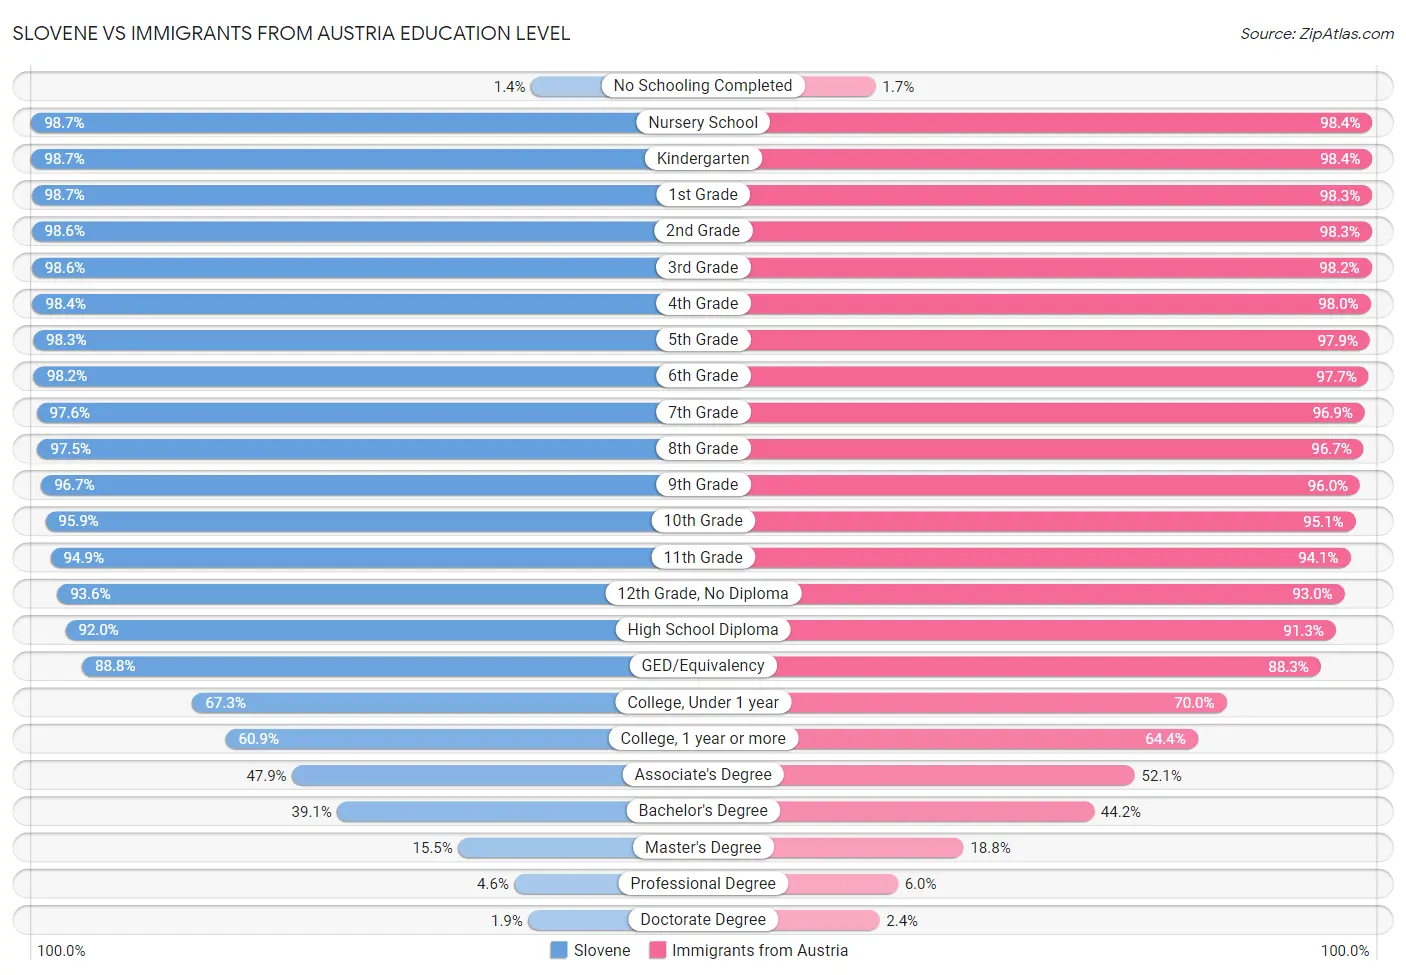 Slovene vs Immigrants from Austria Education Level